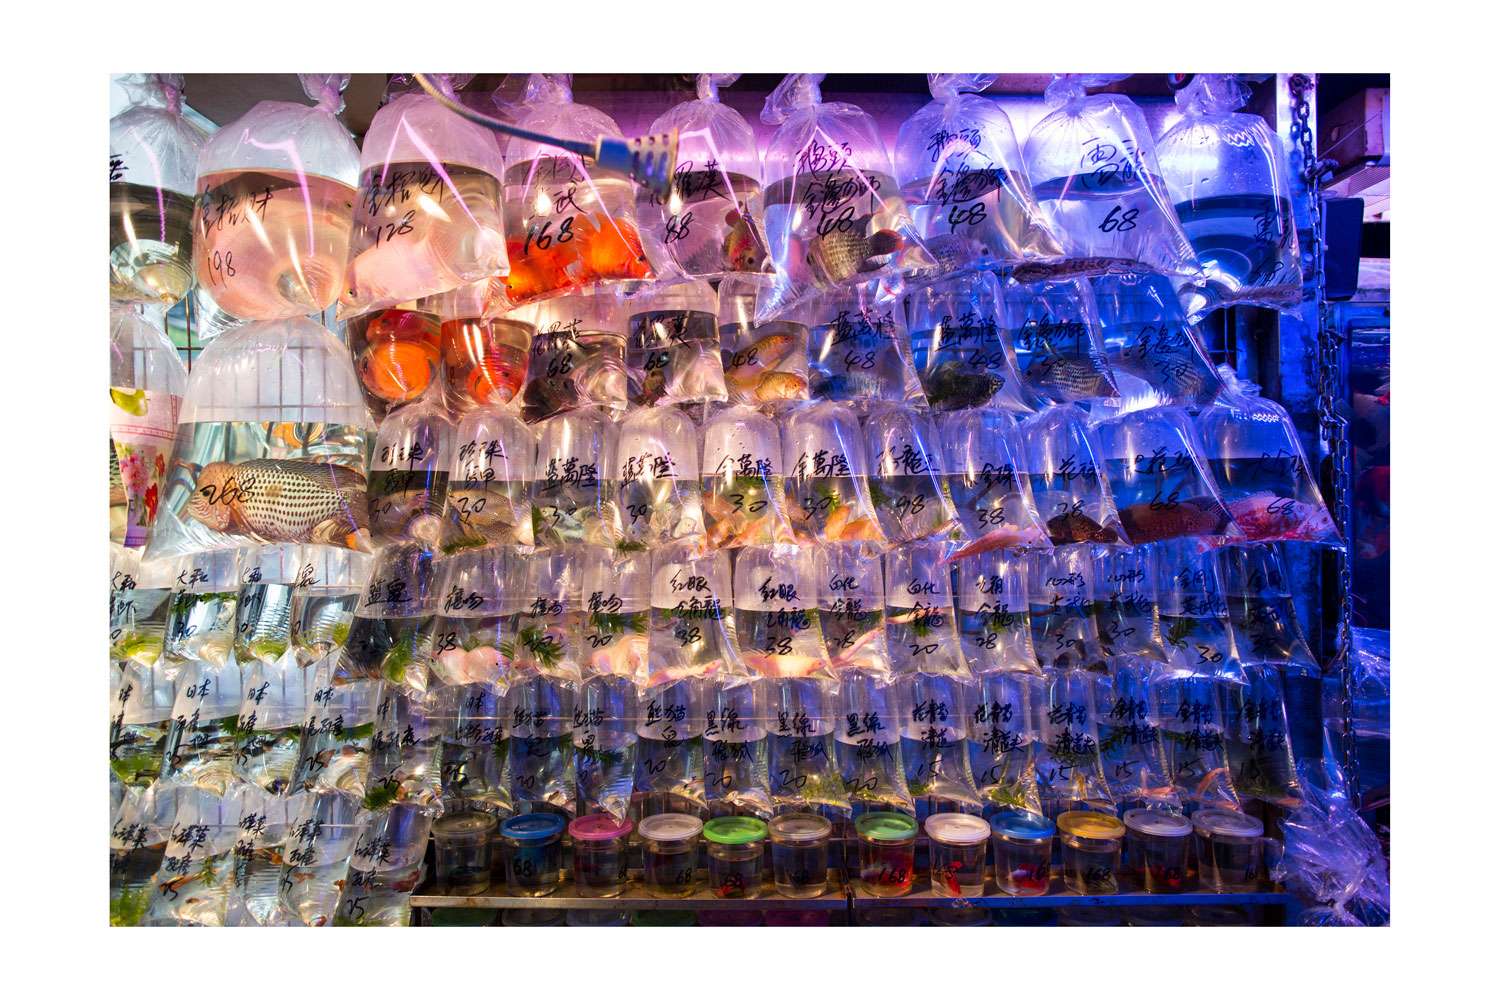 One of the goldfish shops on the Hong Kong goldfish market. From the exhibition Hong Kong Goldfish Market at Brooklyn Bridge Park, New York. Photo: Copyright Janus van den Eijnden